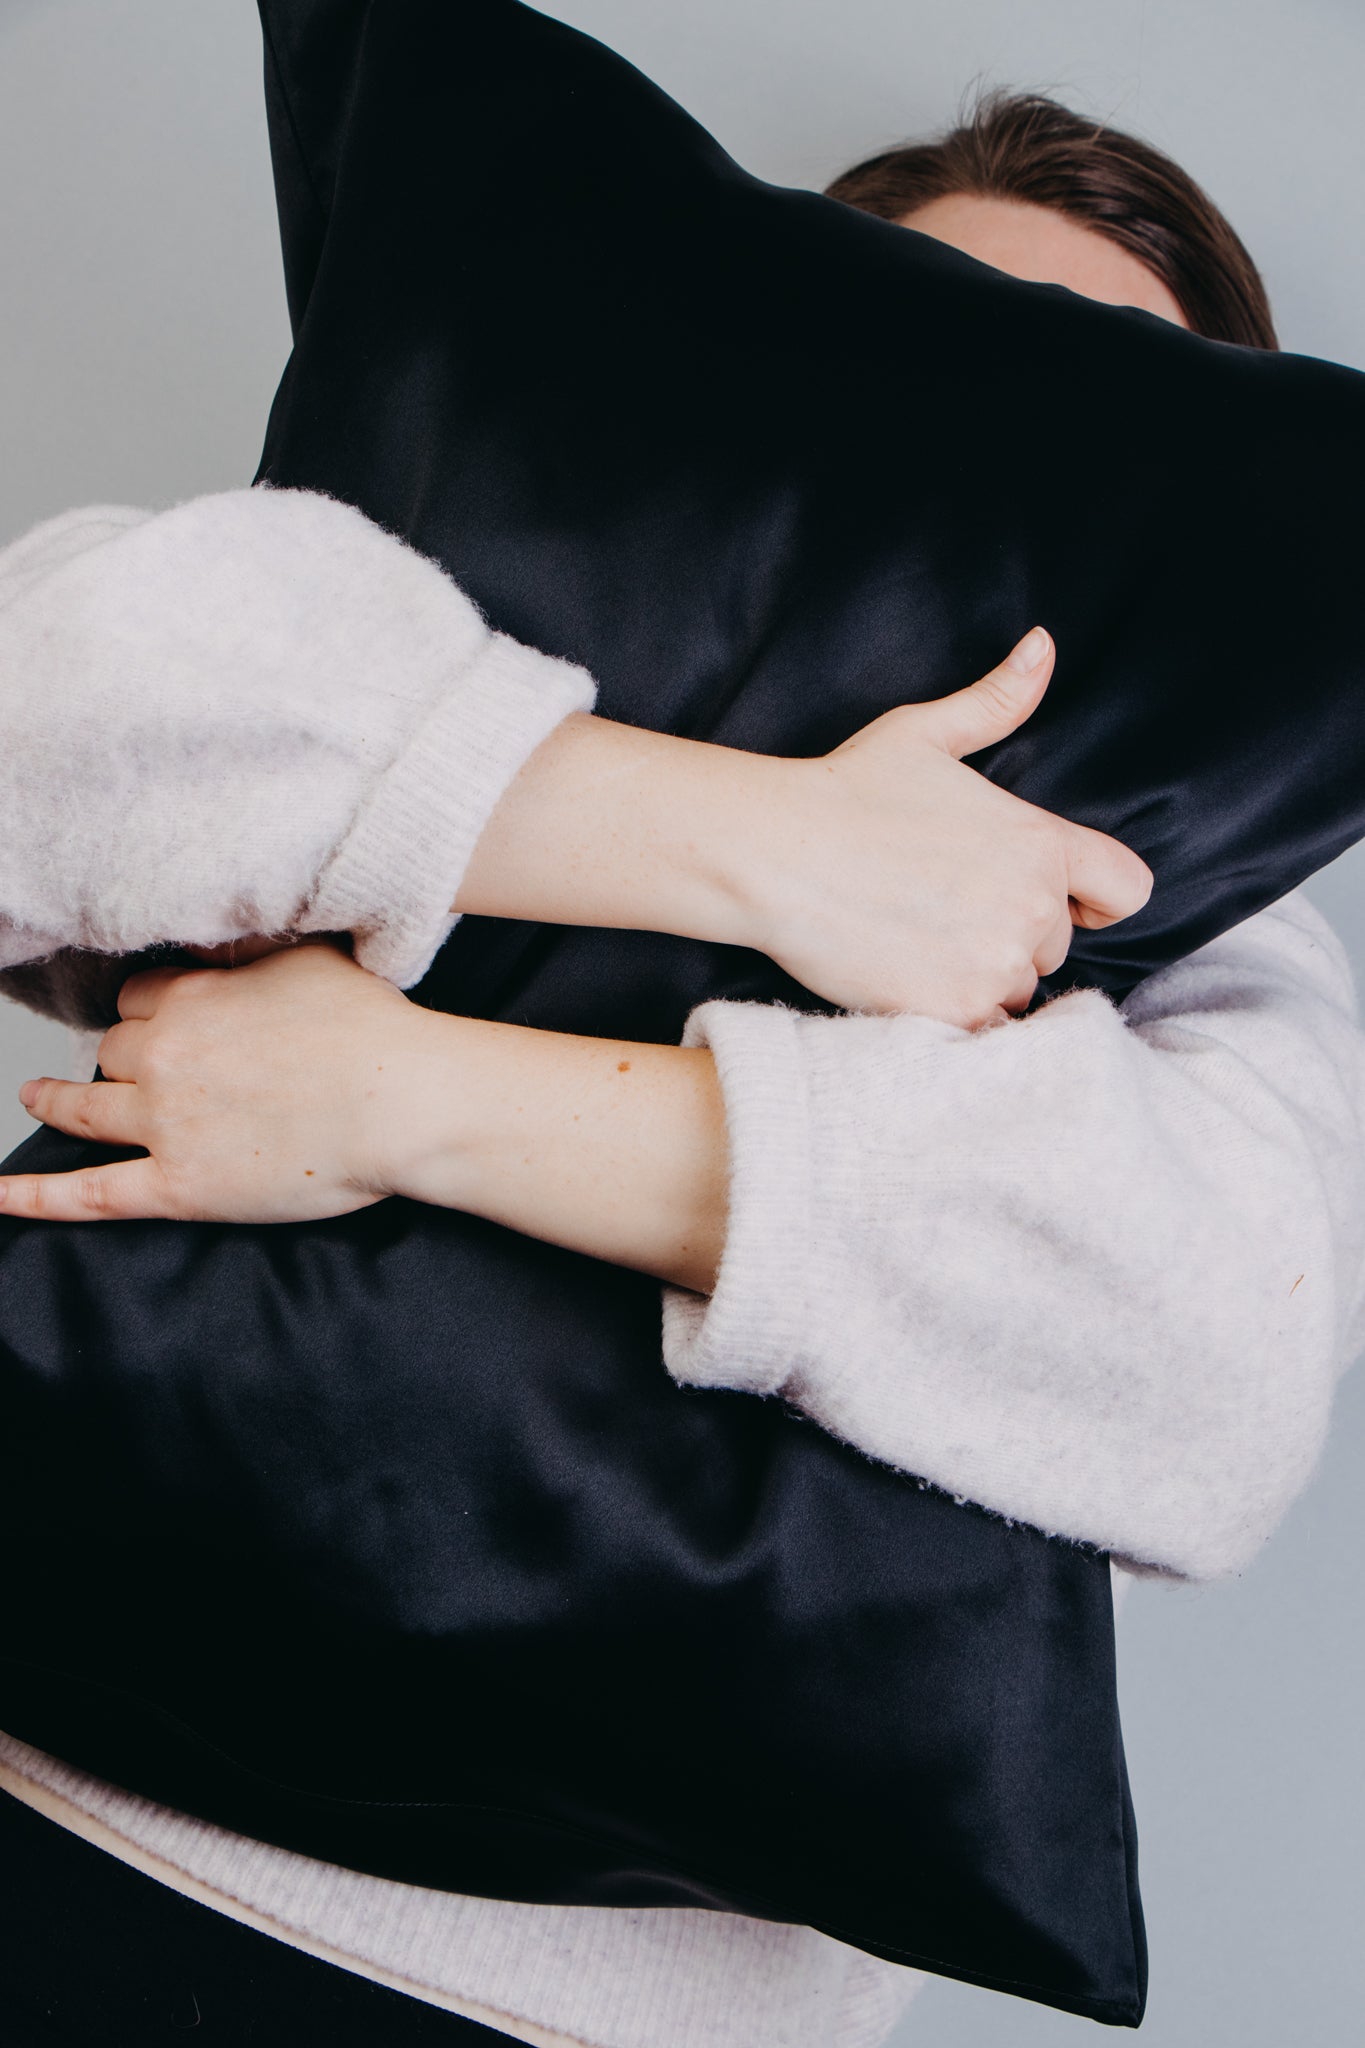 Black silk pillowcase, hands around and holding black pillow